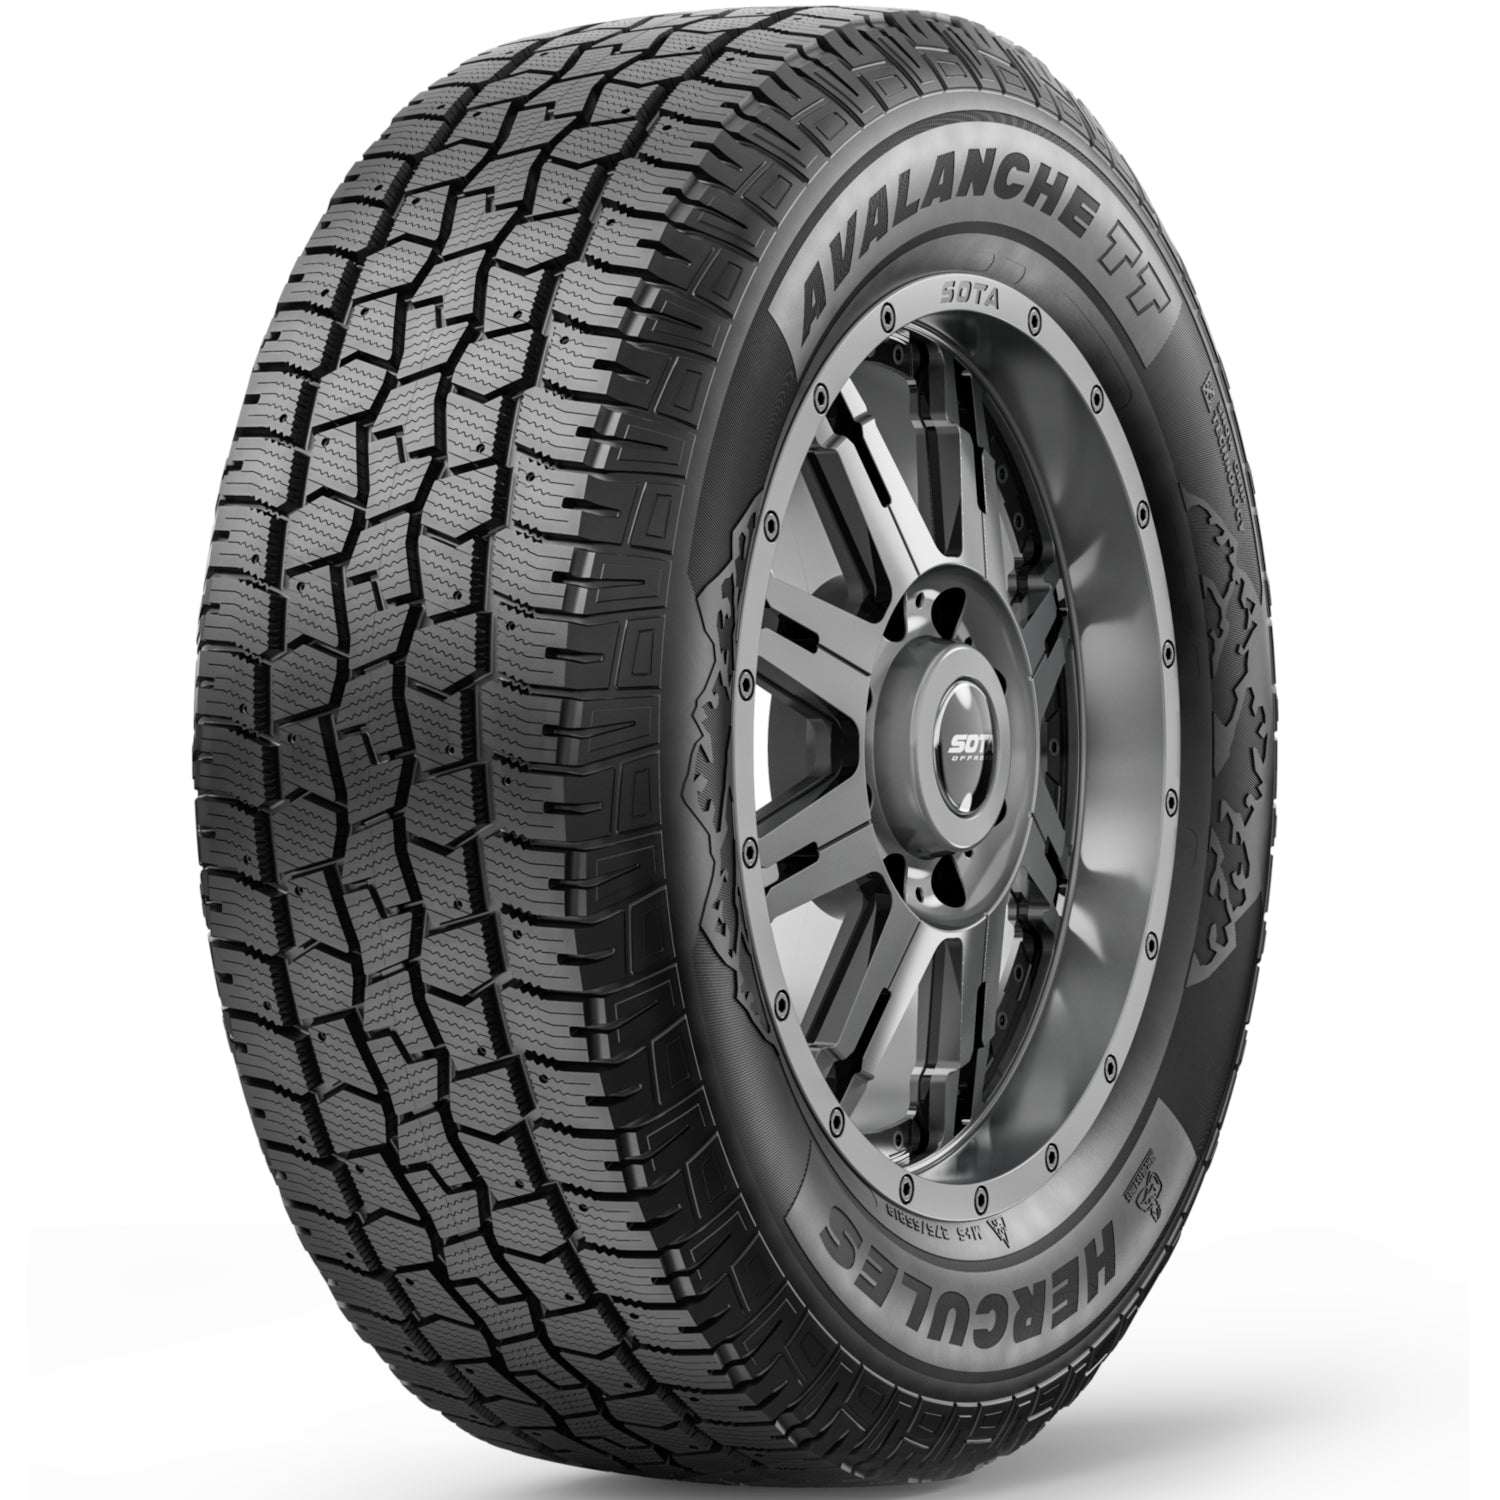 HERCULES AVALANCHE TT 285/45R22XL (32.2X11.2R 22) Tires